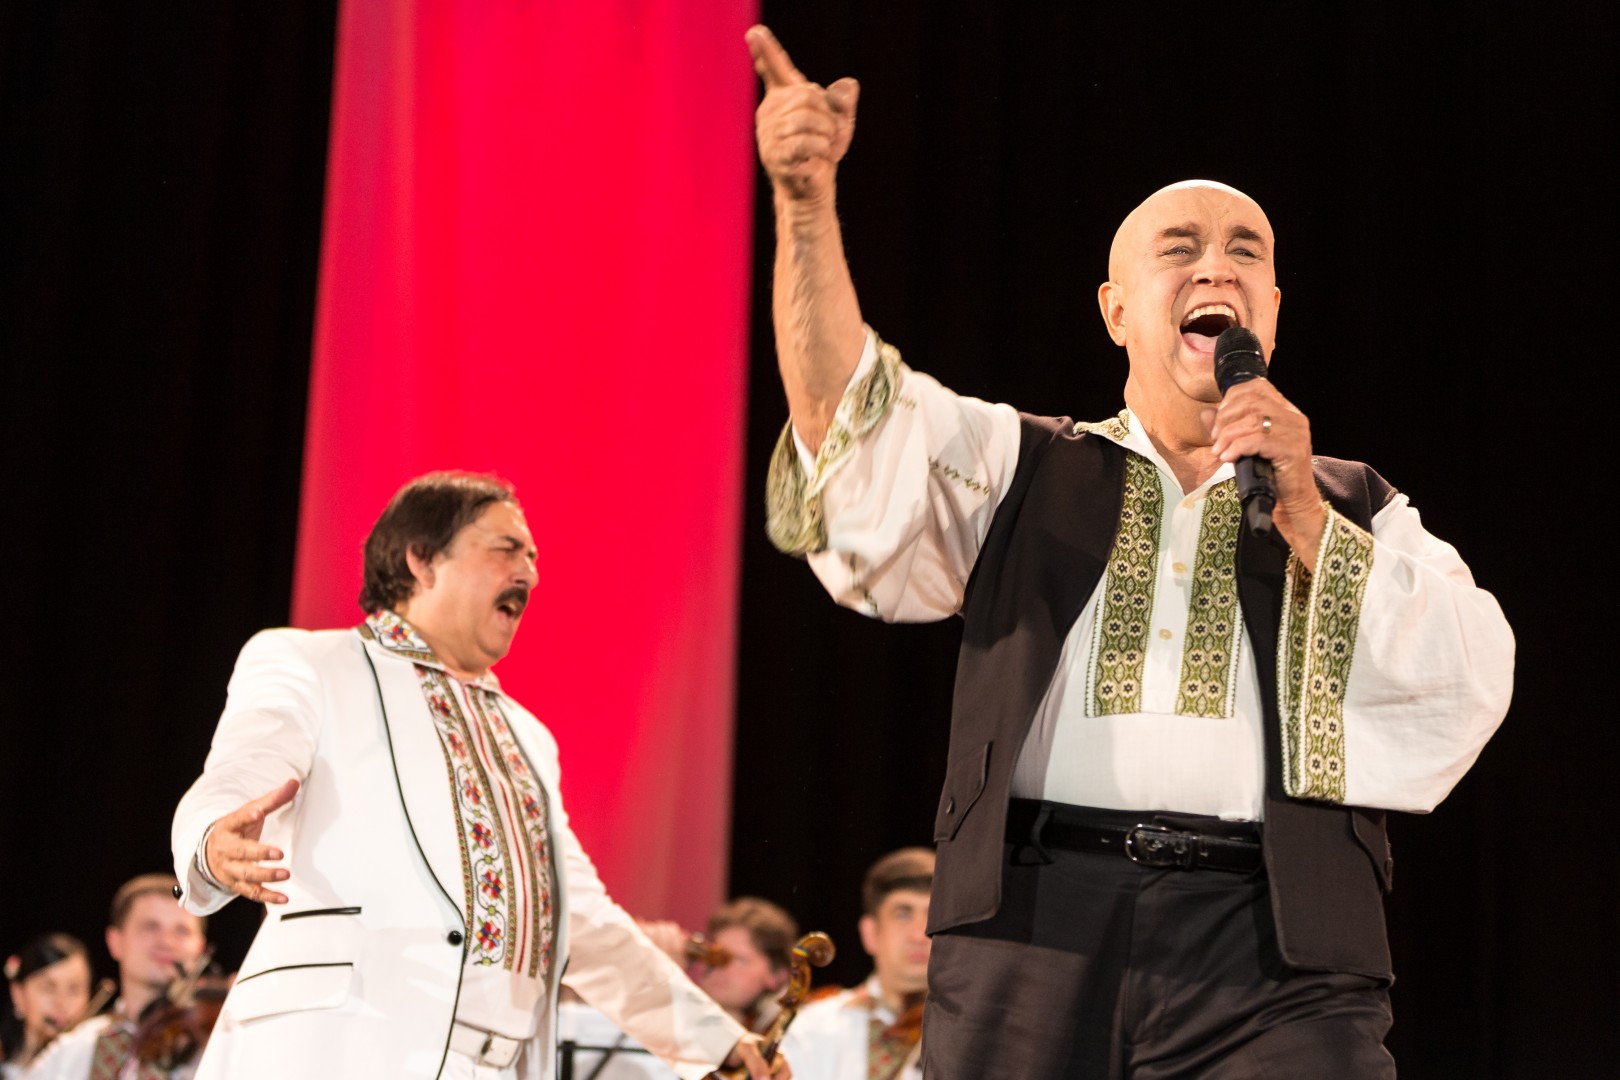 Benone Sinulescu at Sala Palatului in Bucharest on May 22, 2014 (3eefceec06)